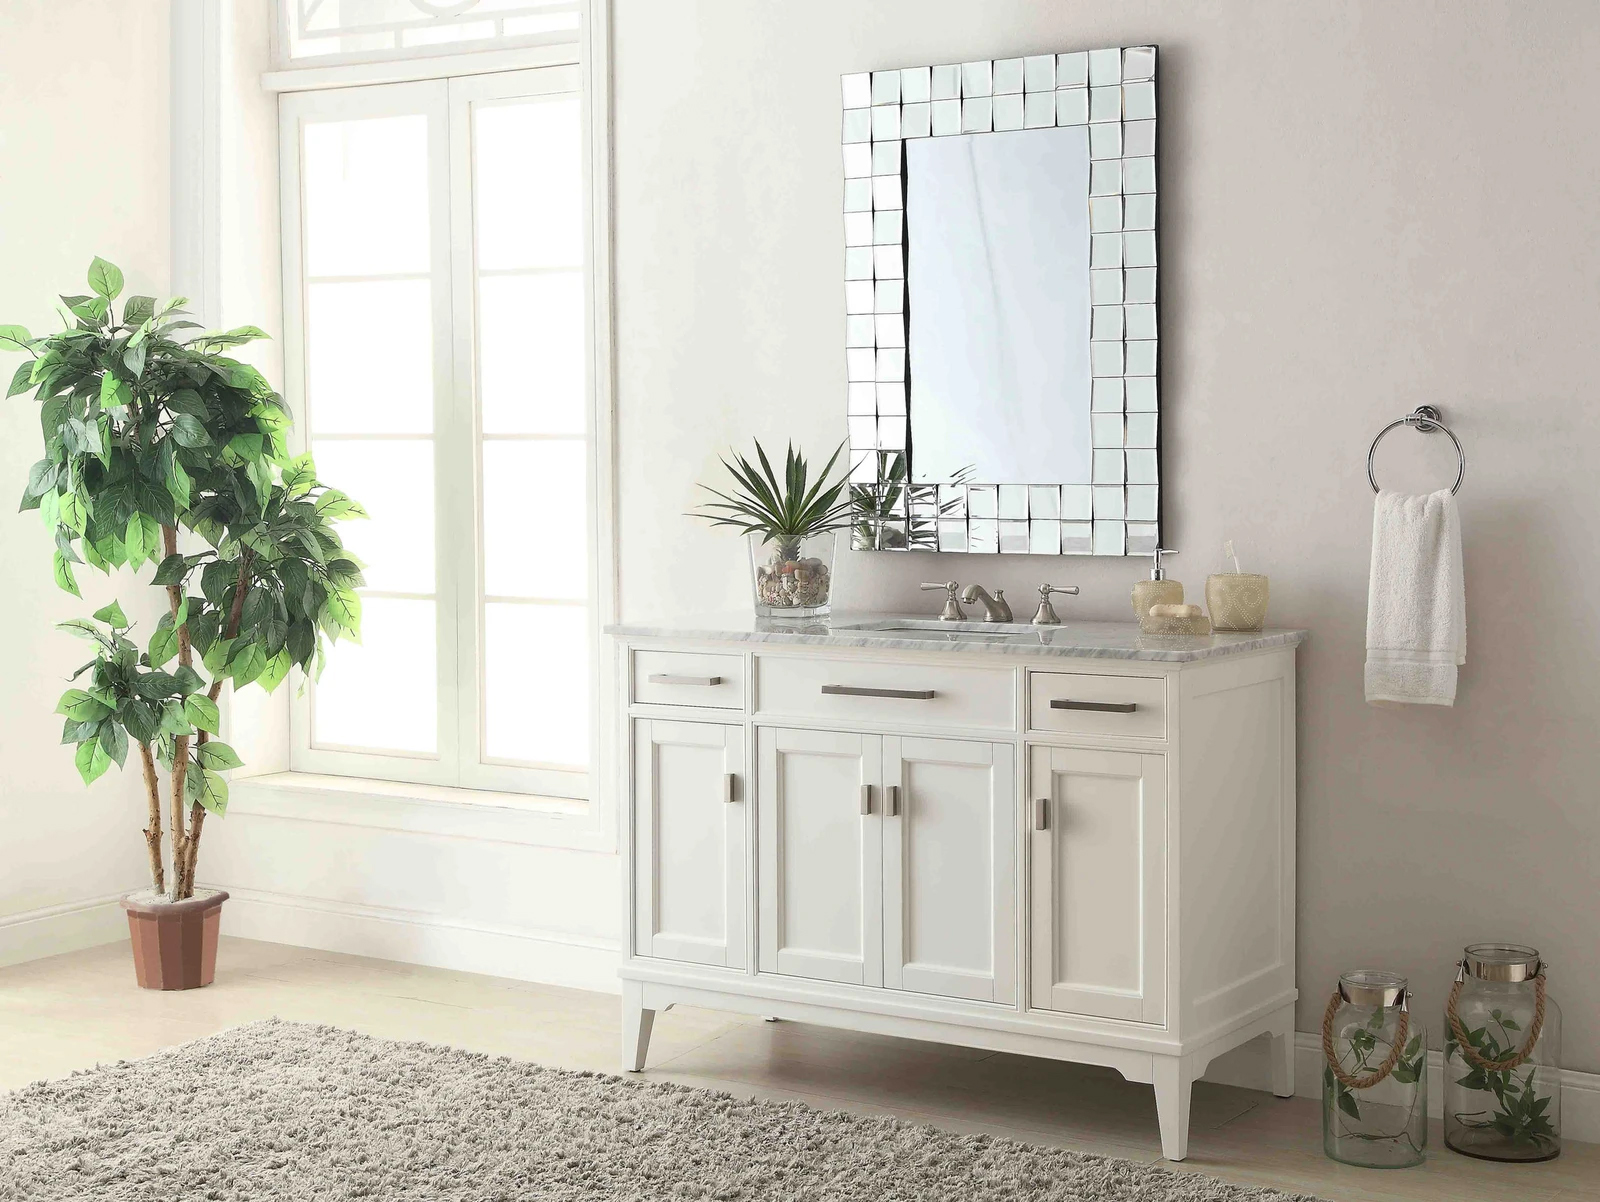 49" Italian Carrara Marble Top Single Bathroom Vanity